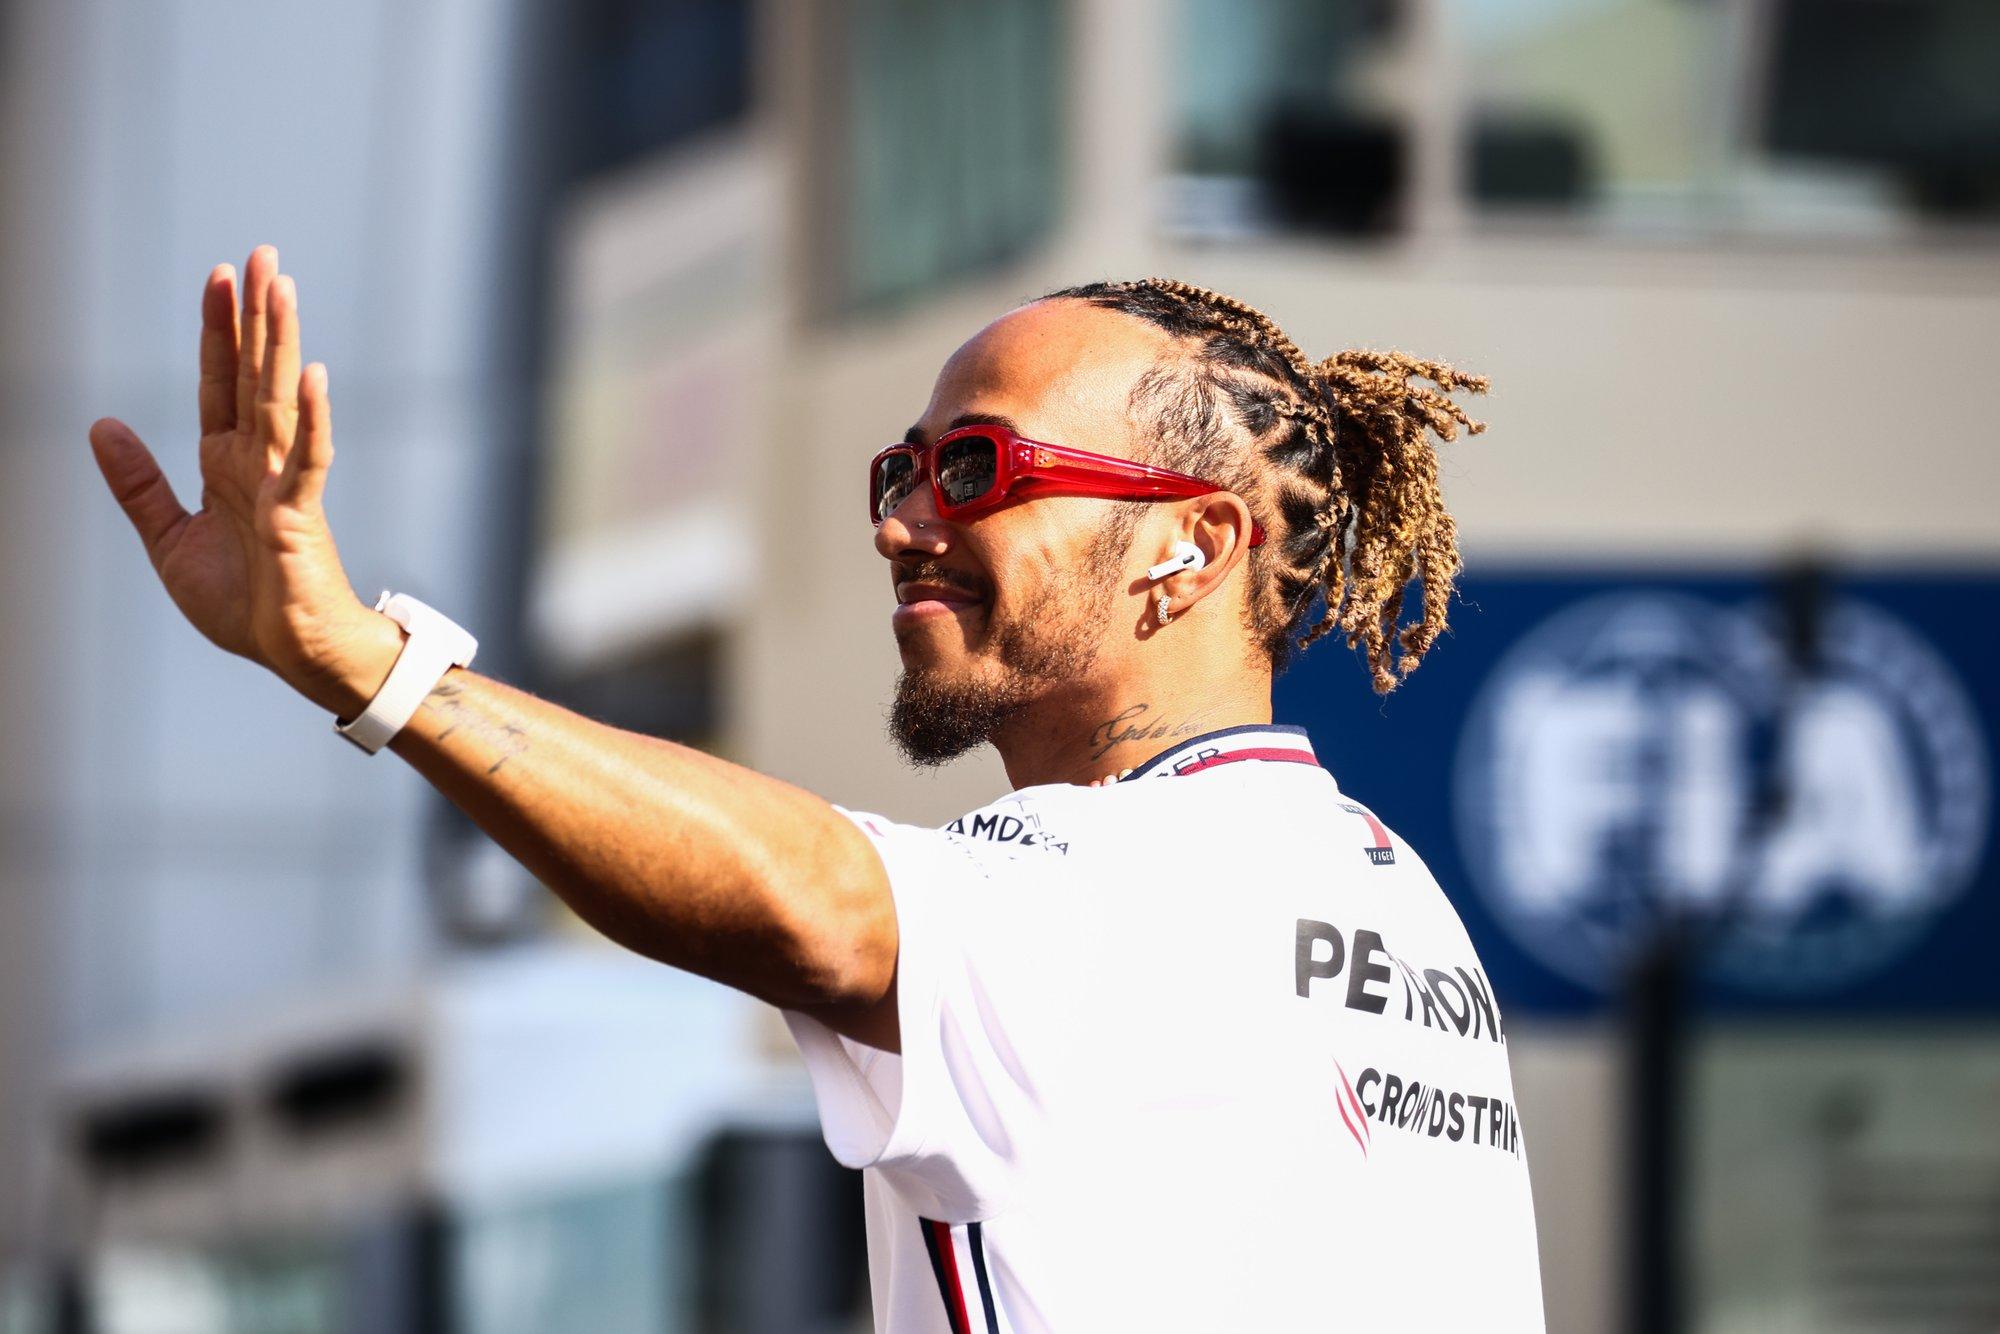 Oficialu: Hamiltonas palieka „Mercedes“ ir nuo 2025 m. papildys „Ferrari“ gretas